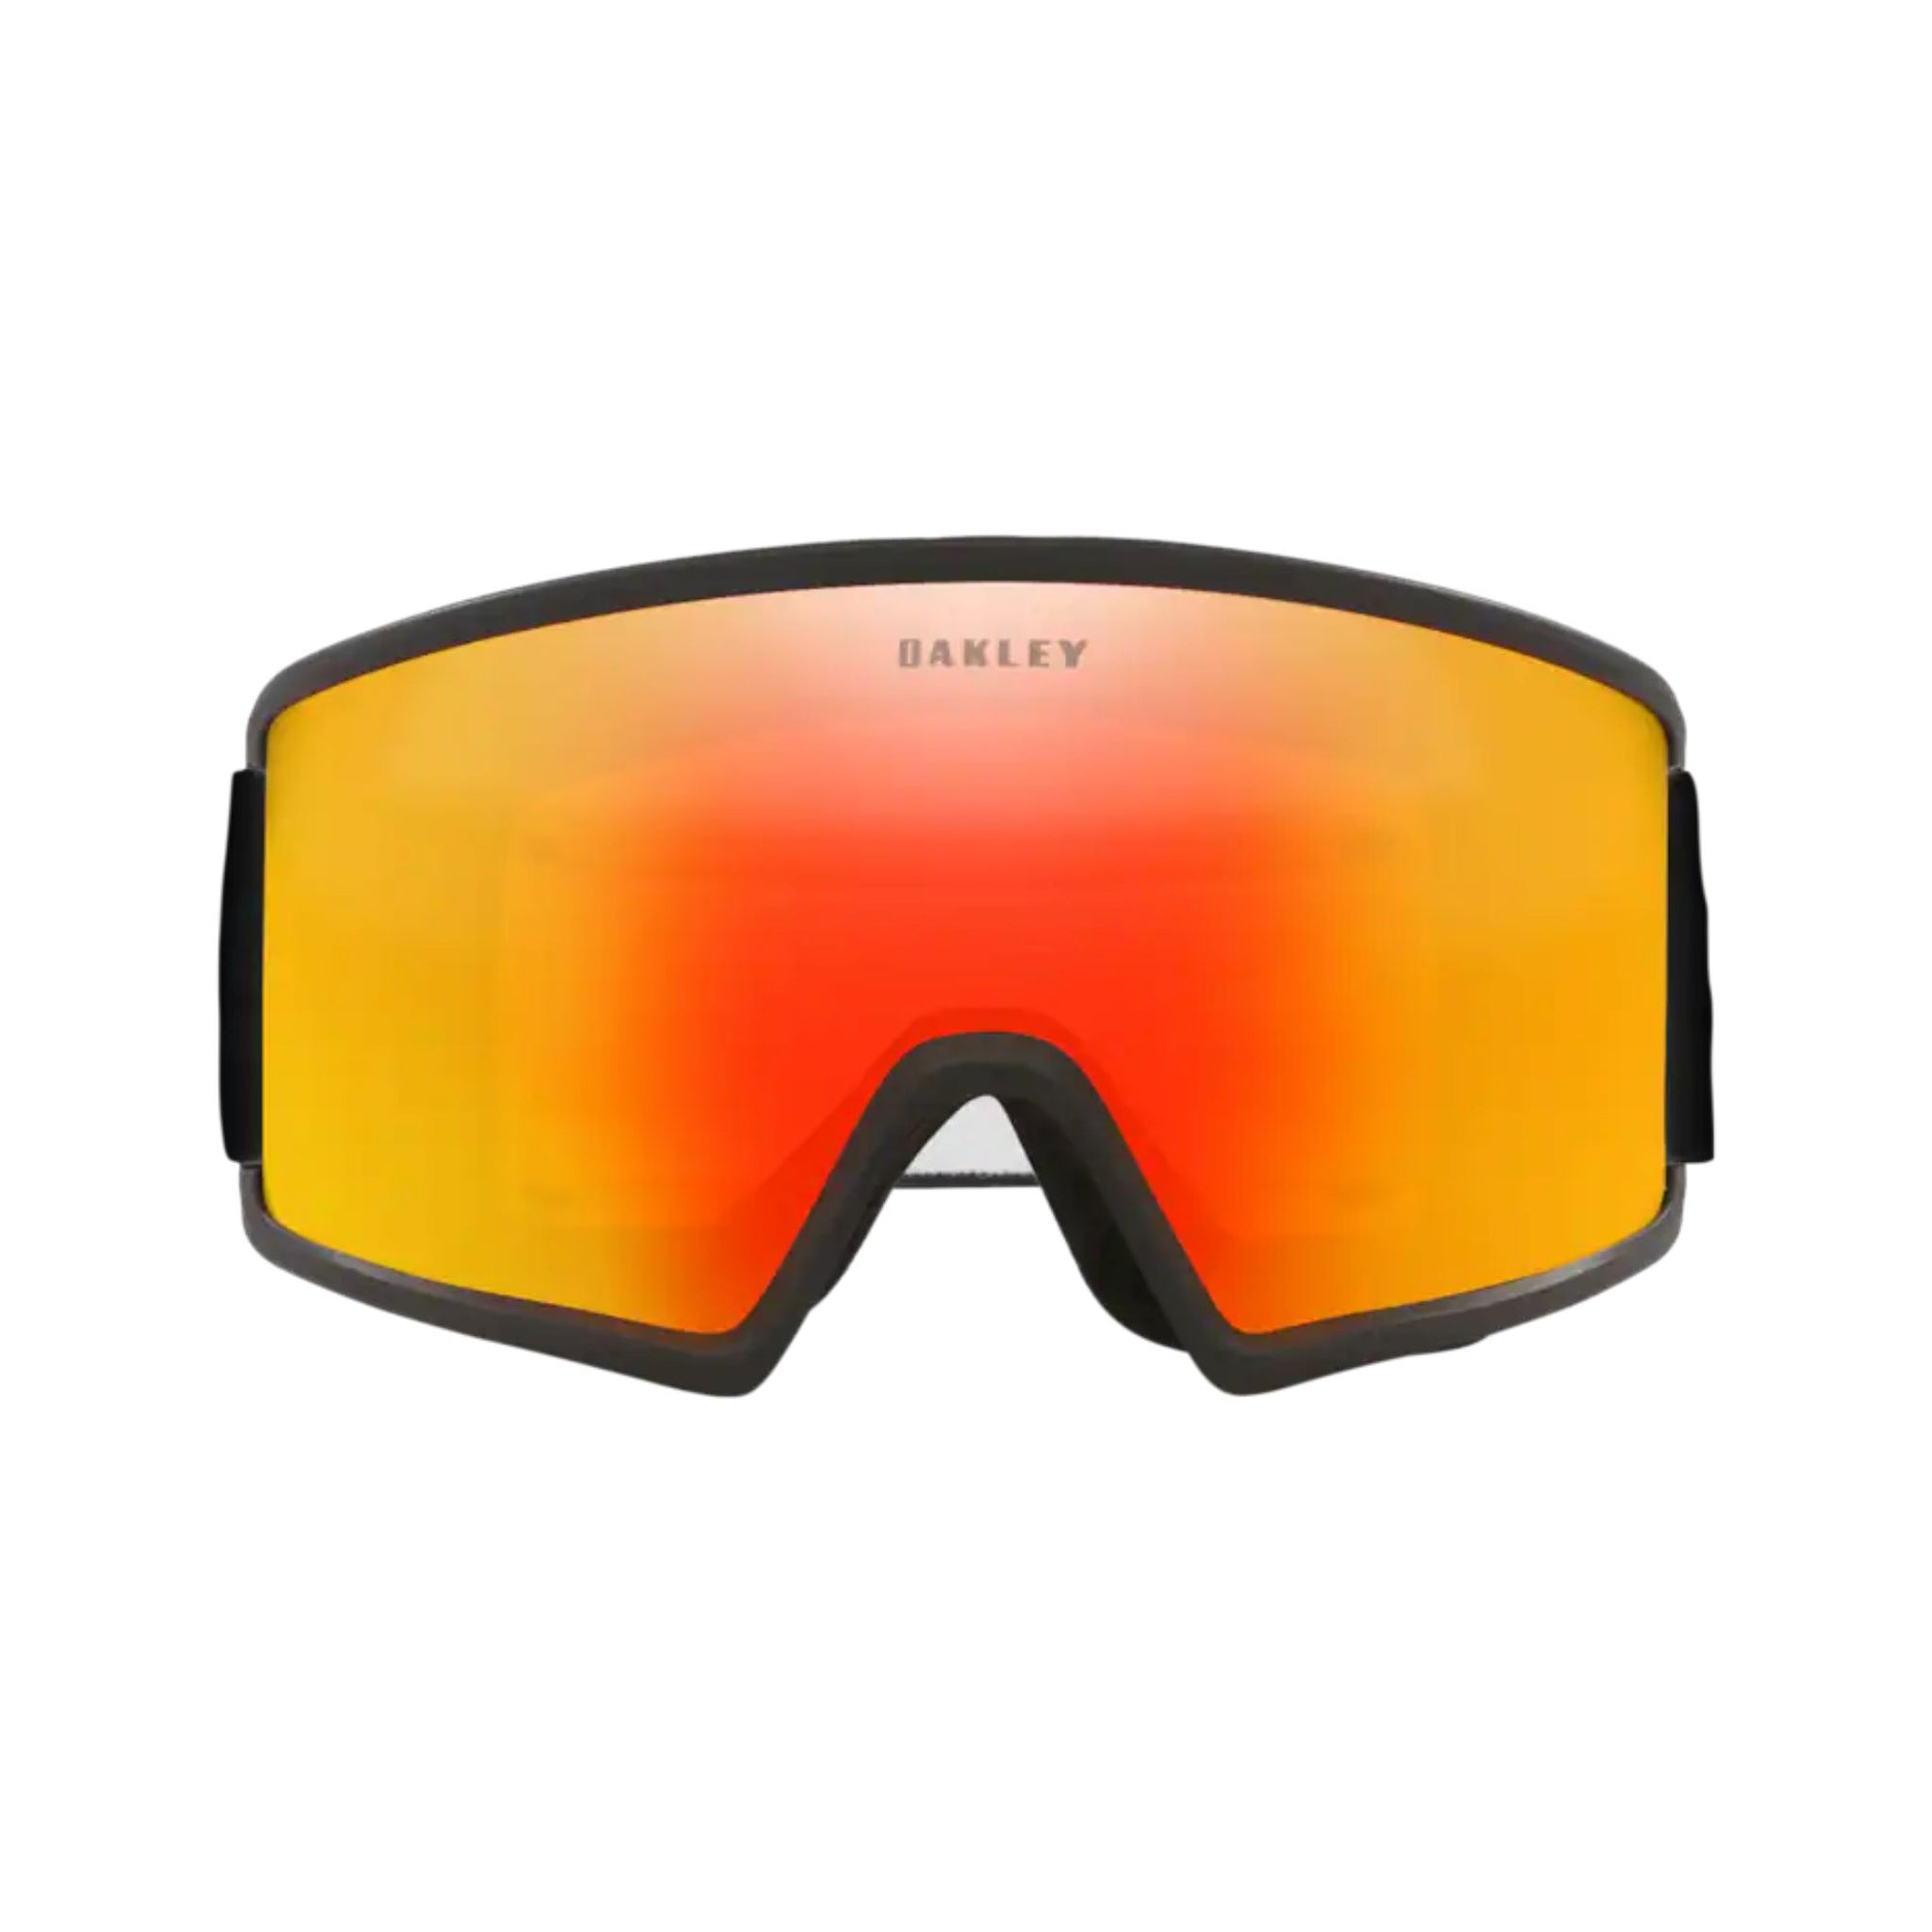 Oakley Target Line S (Small Fit) Goggle - Matte Black Fire Iridium Goggles Oakley 